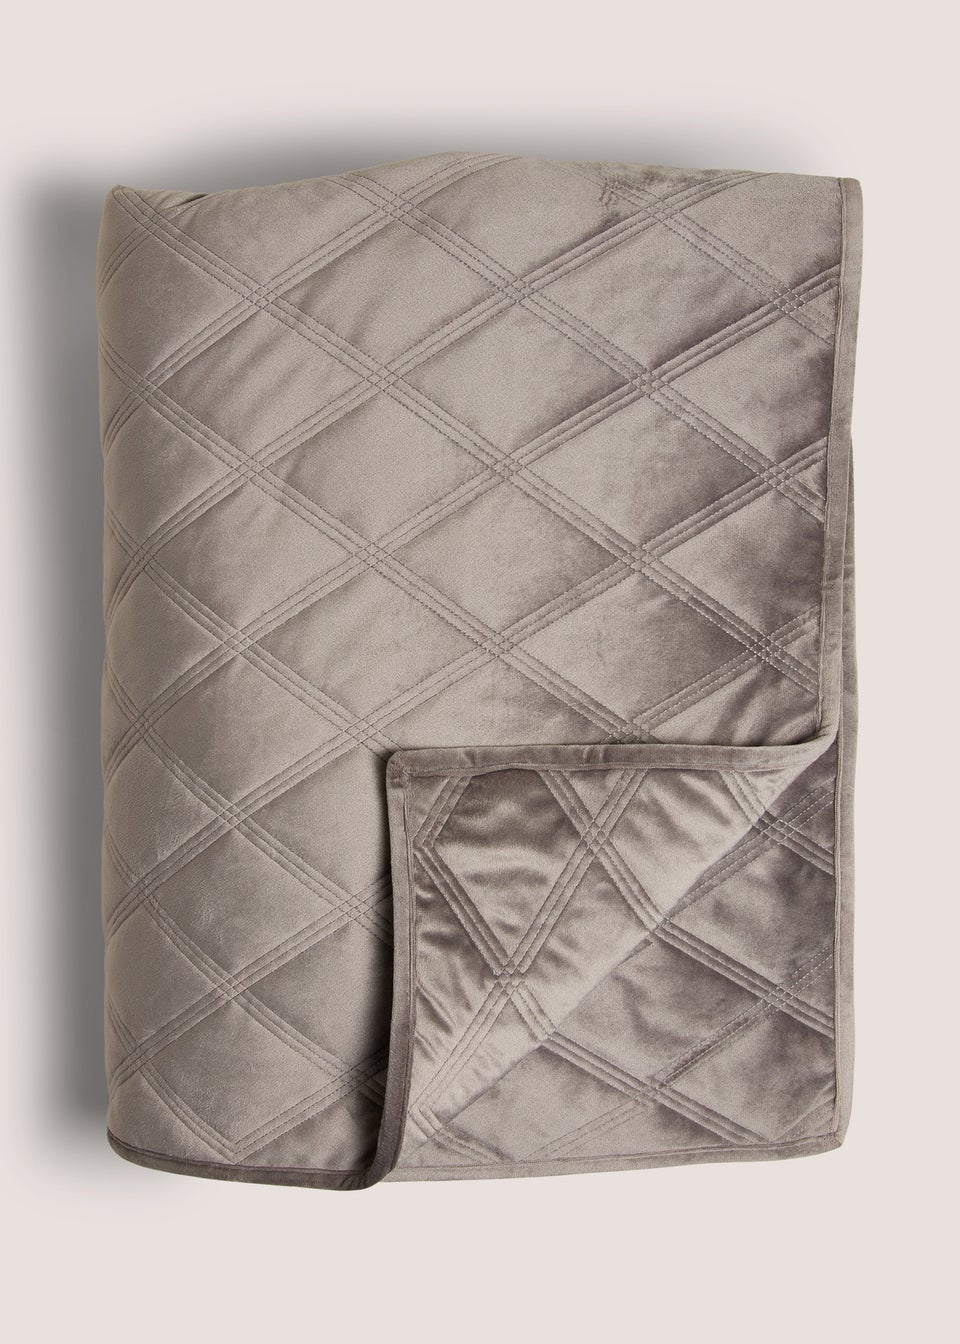 Charcoal Velvet Quilted Bedspread (235cm x 235cm)